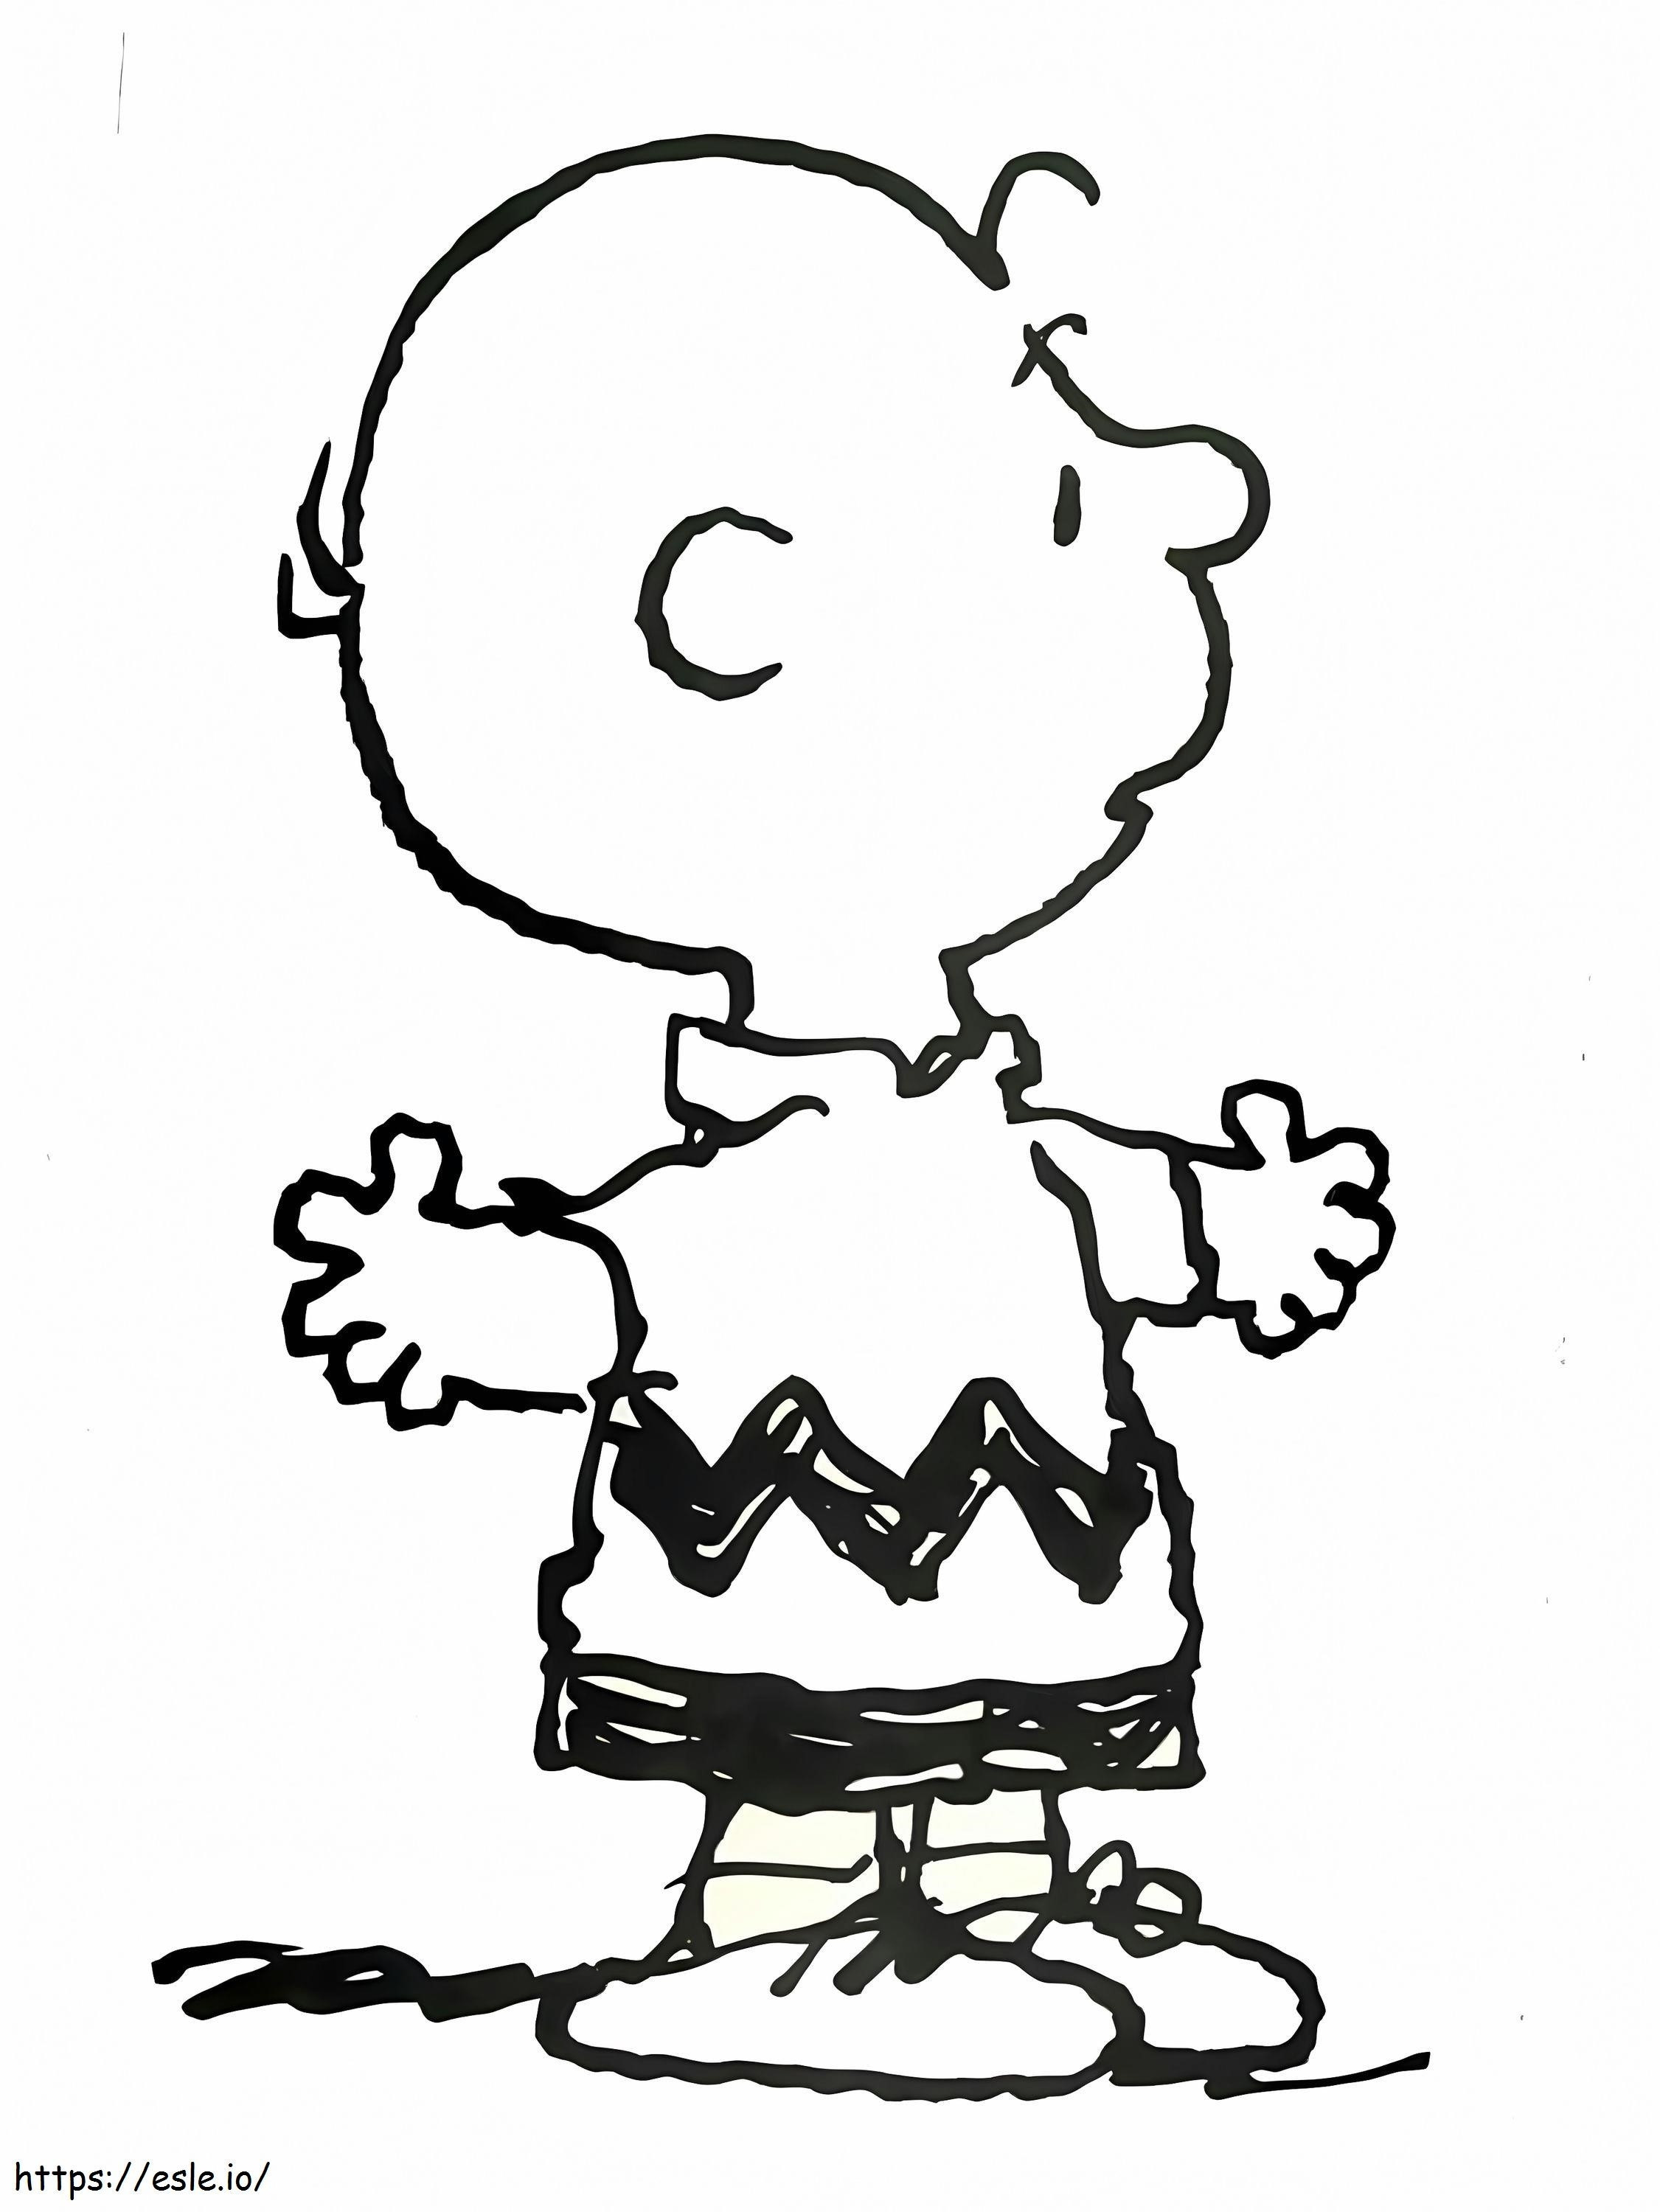 Charlie Brown 2 1 kolorowanka